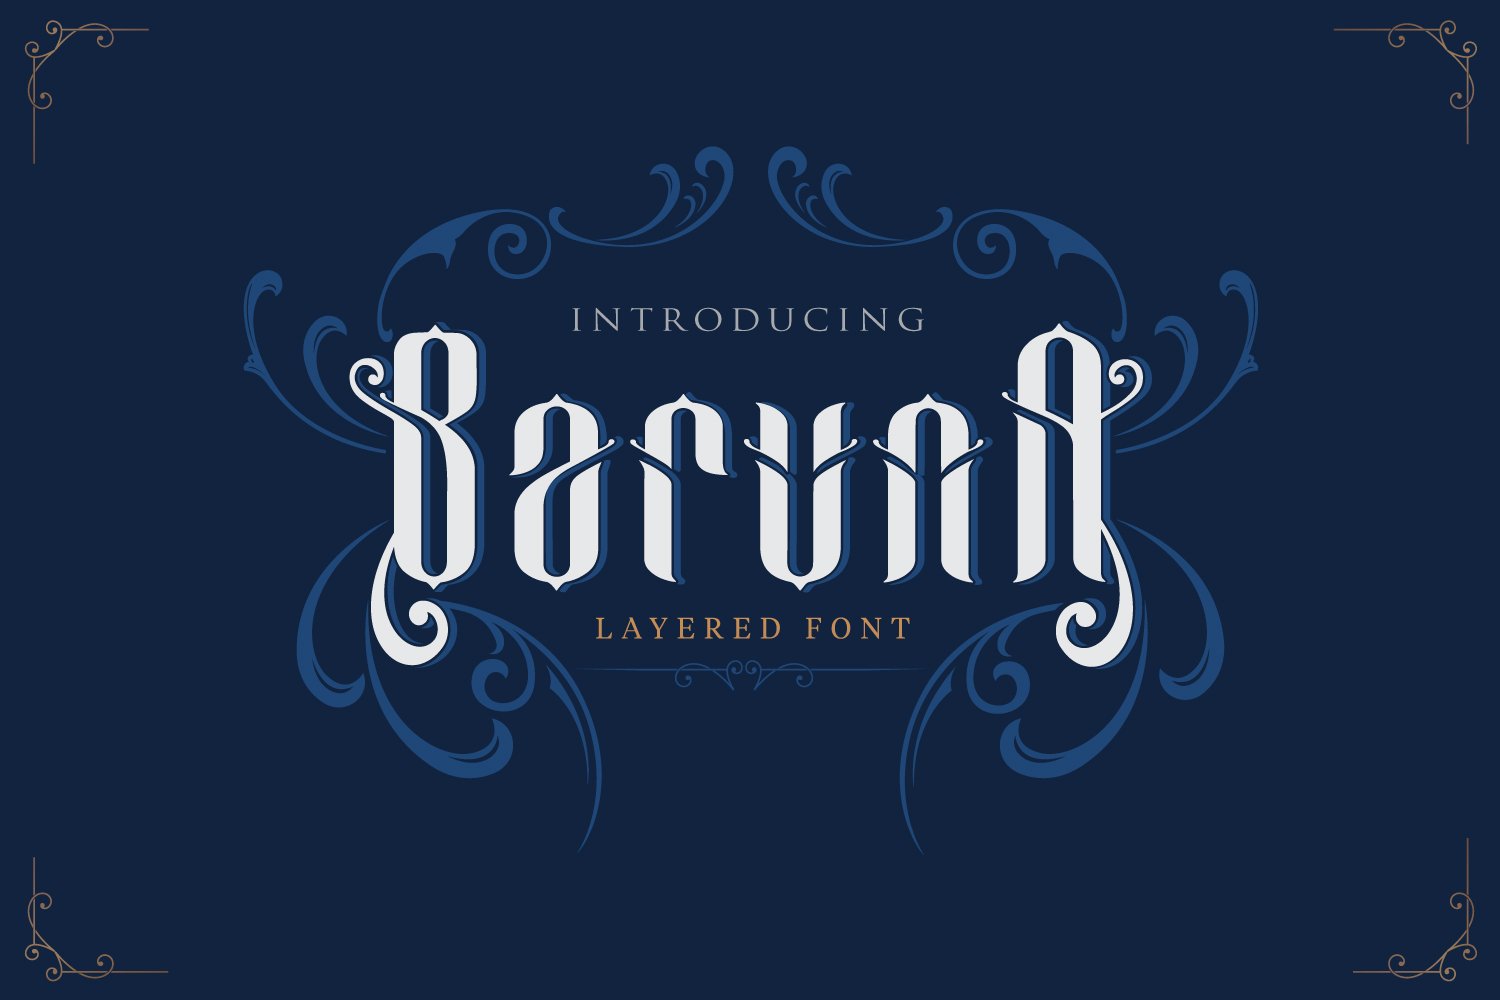 Baruna - Layered font - Sale cover image.